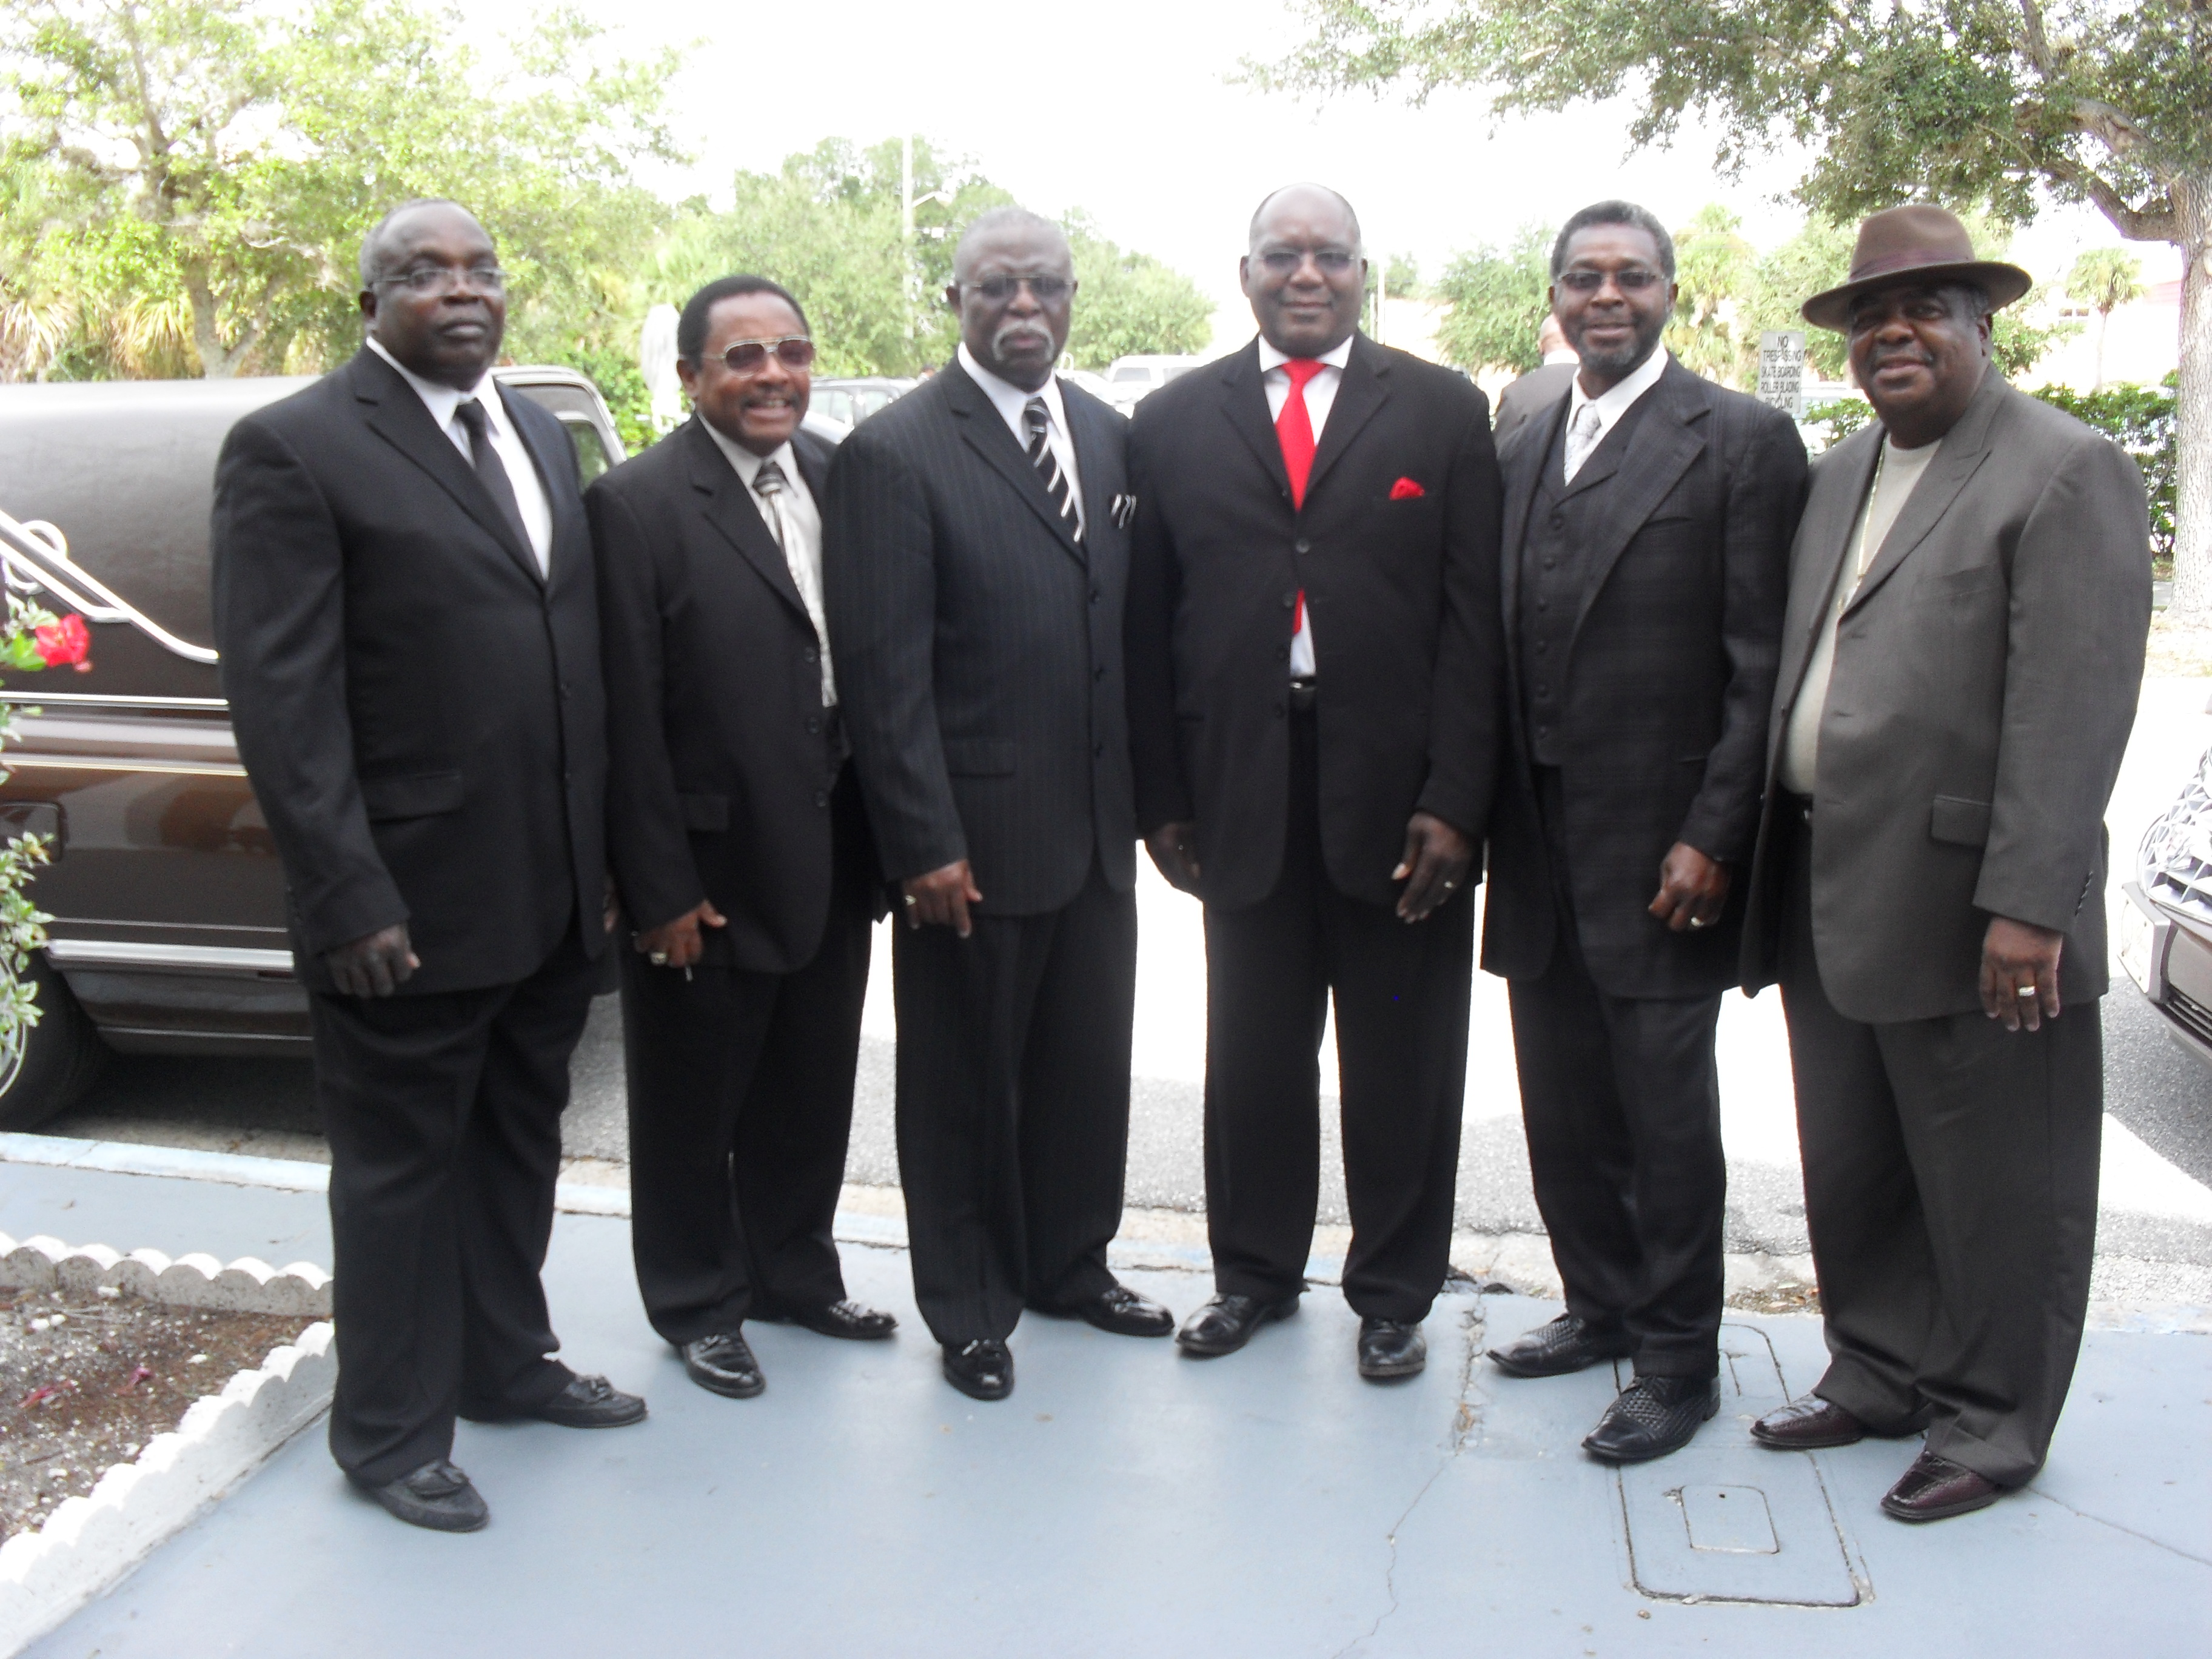 A Few Good Men from the Class of 1967 (Oct 2011)